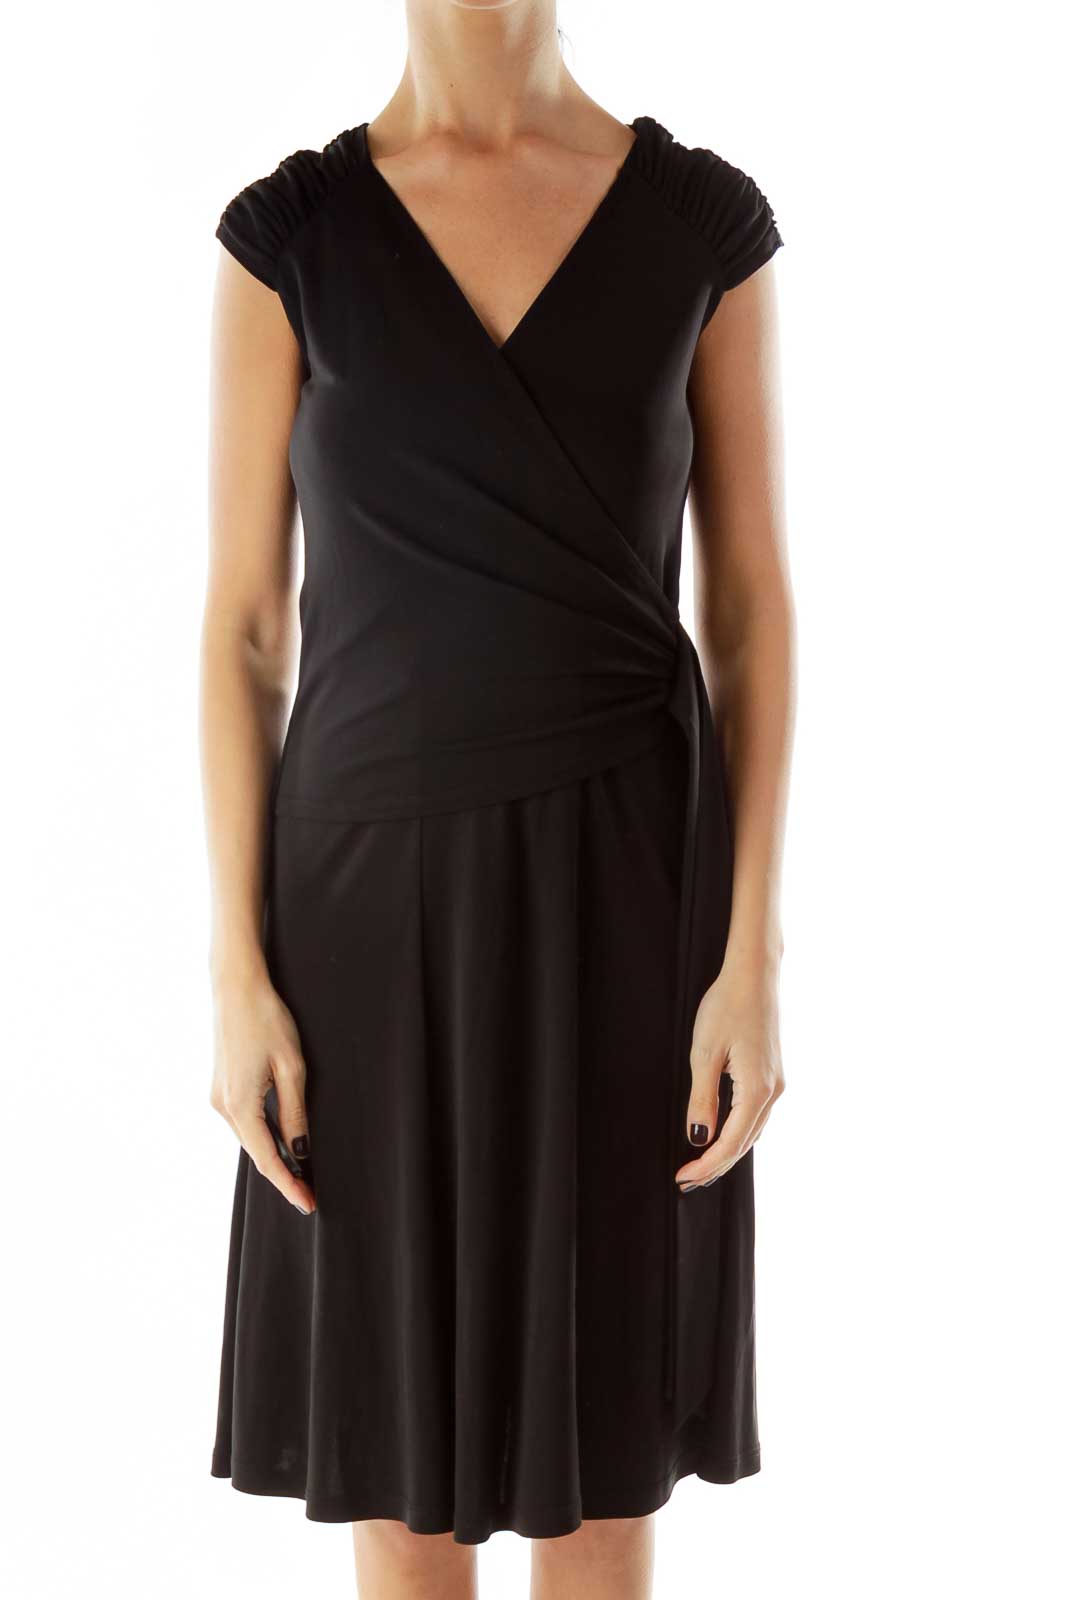 Black Sleeveless Cocktail Dress Front